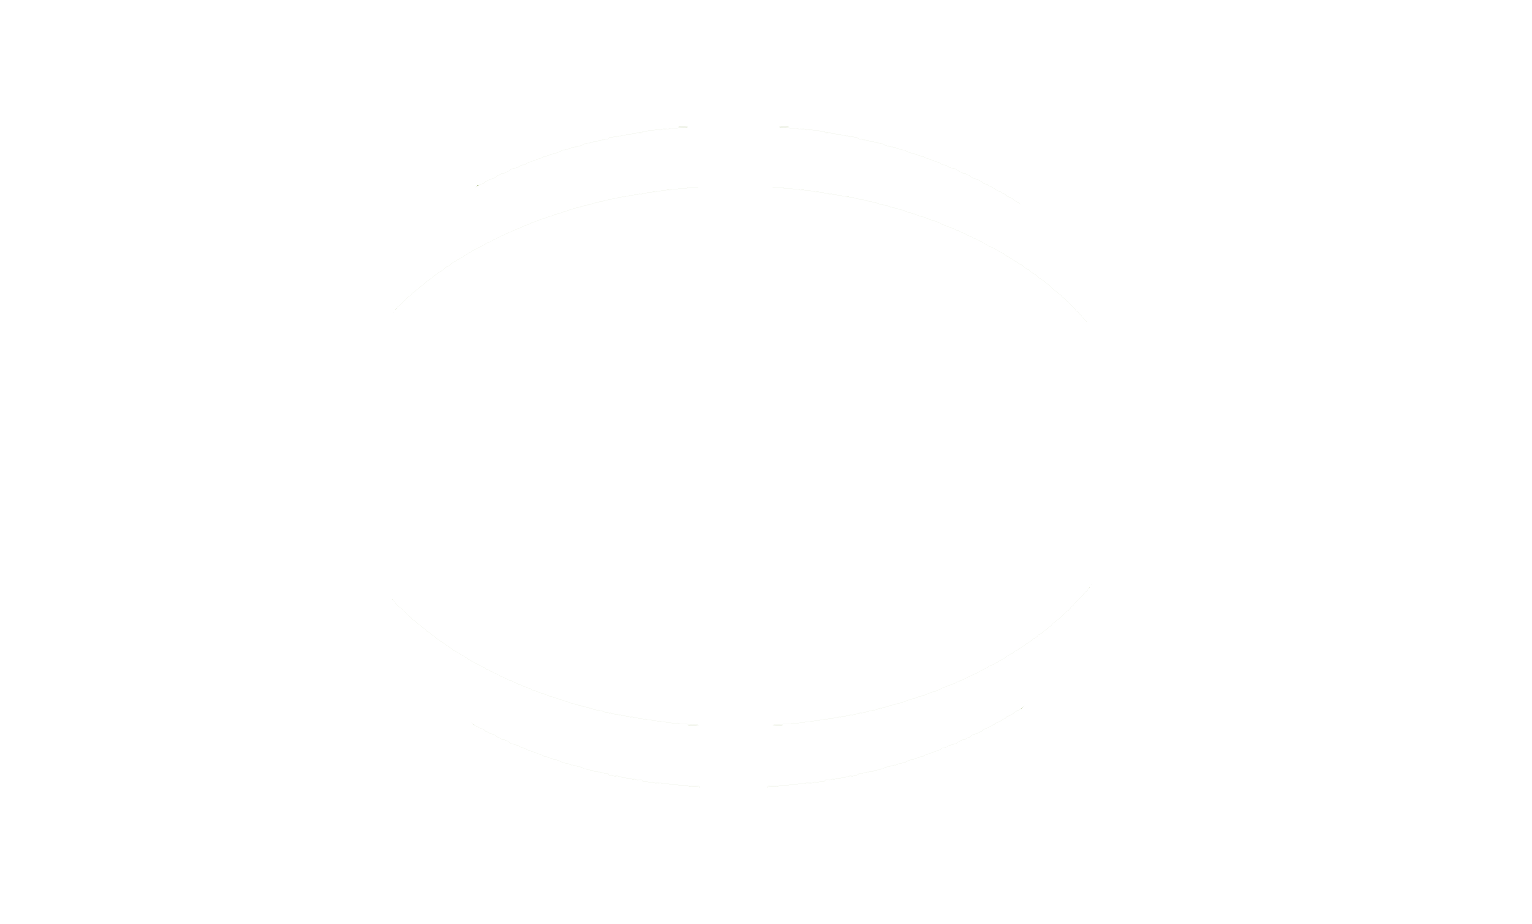 Whole Sale Lighting Distributor and Designer